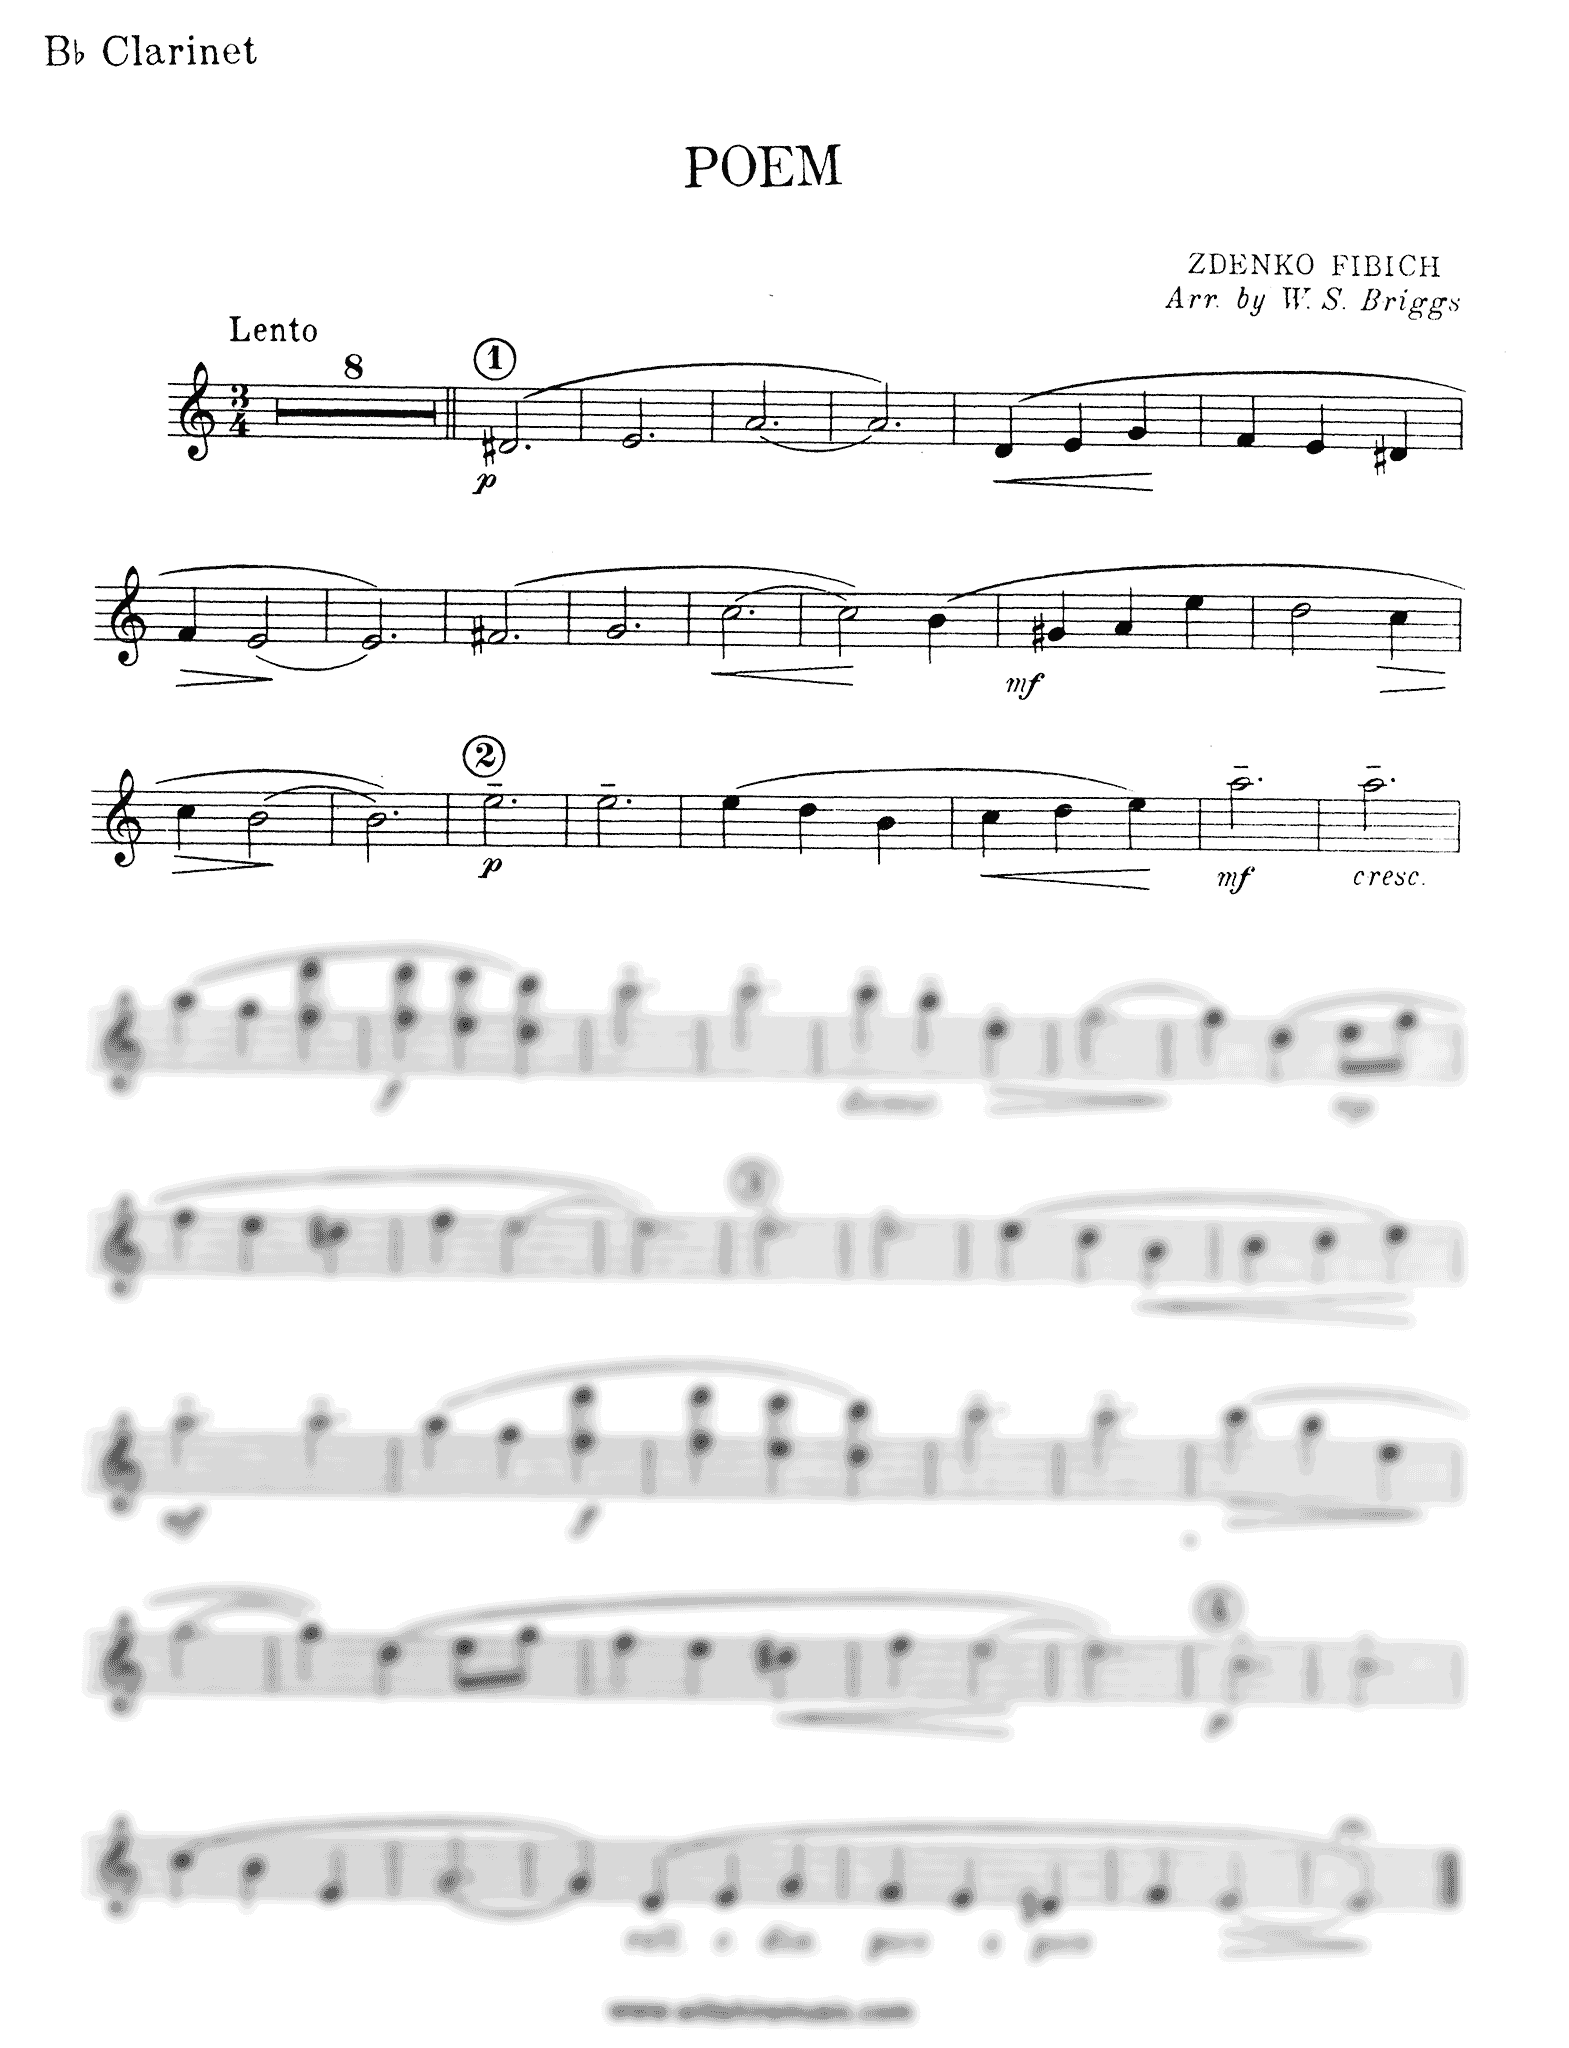 Fibich Poem, Op. 39a clarinet part